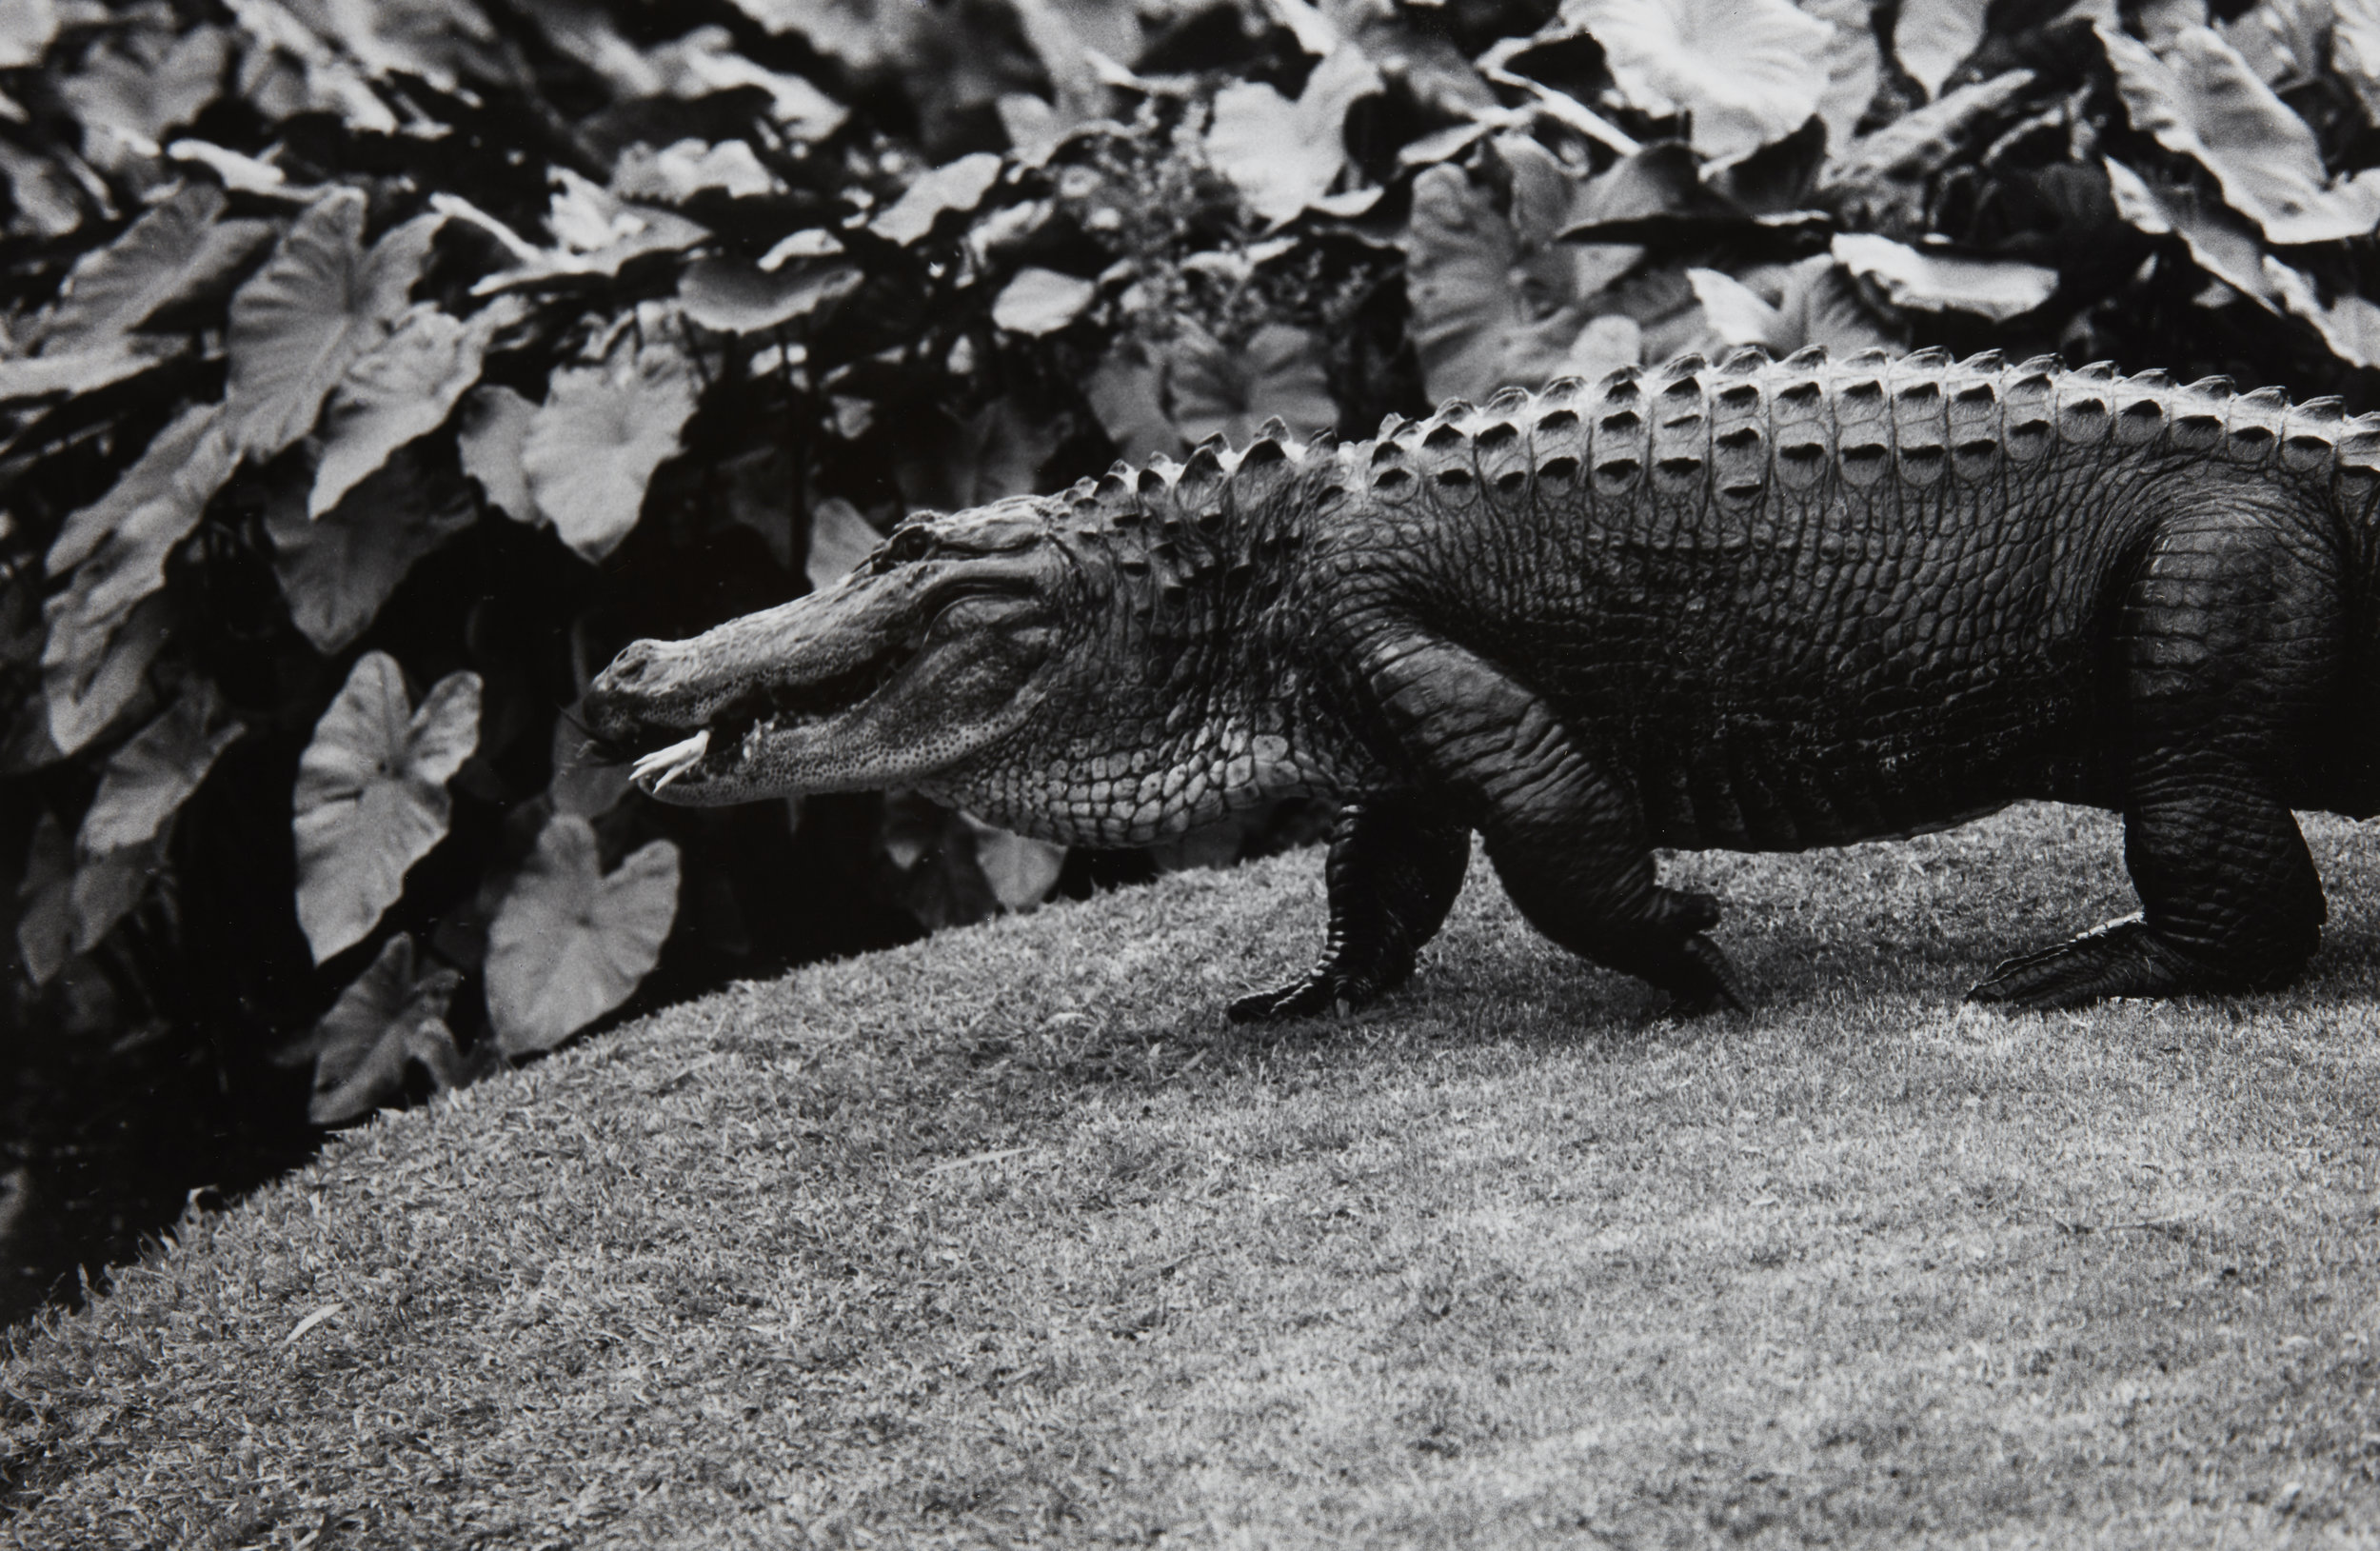 Peter Peryer, Alligator, 1998